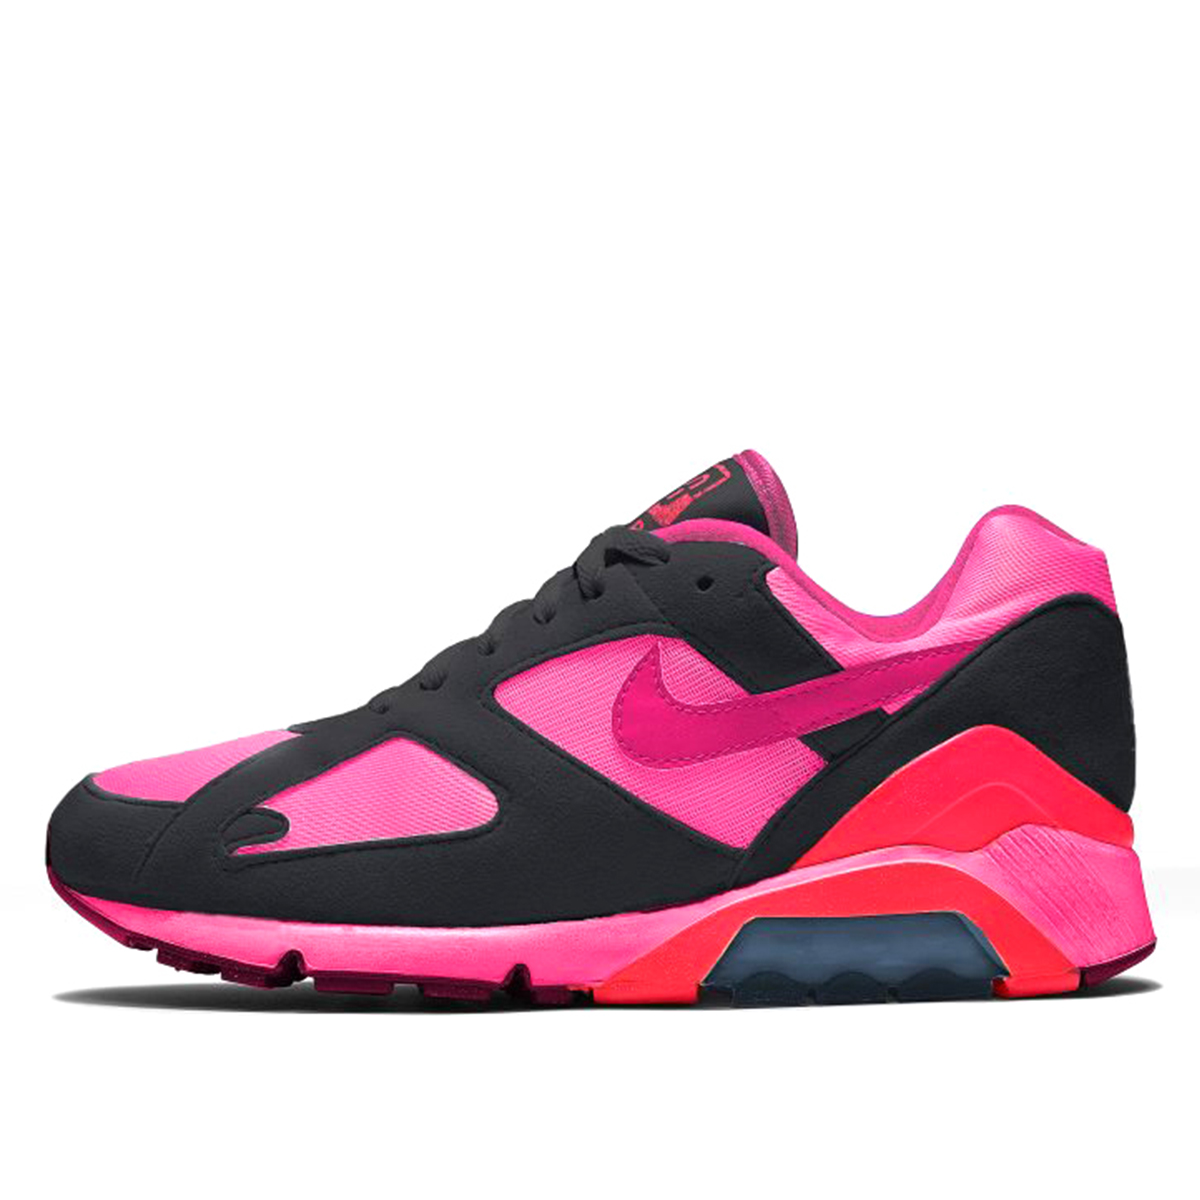 Nike x des Garcons CDG Air Max 180 Black Pink | AO4641-601 - KLEKT